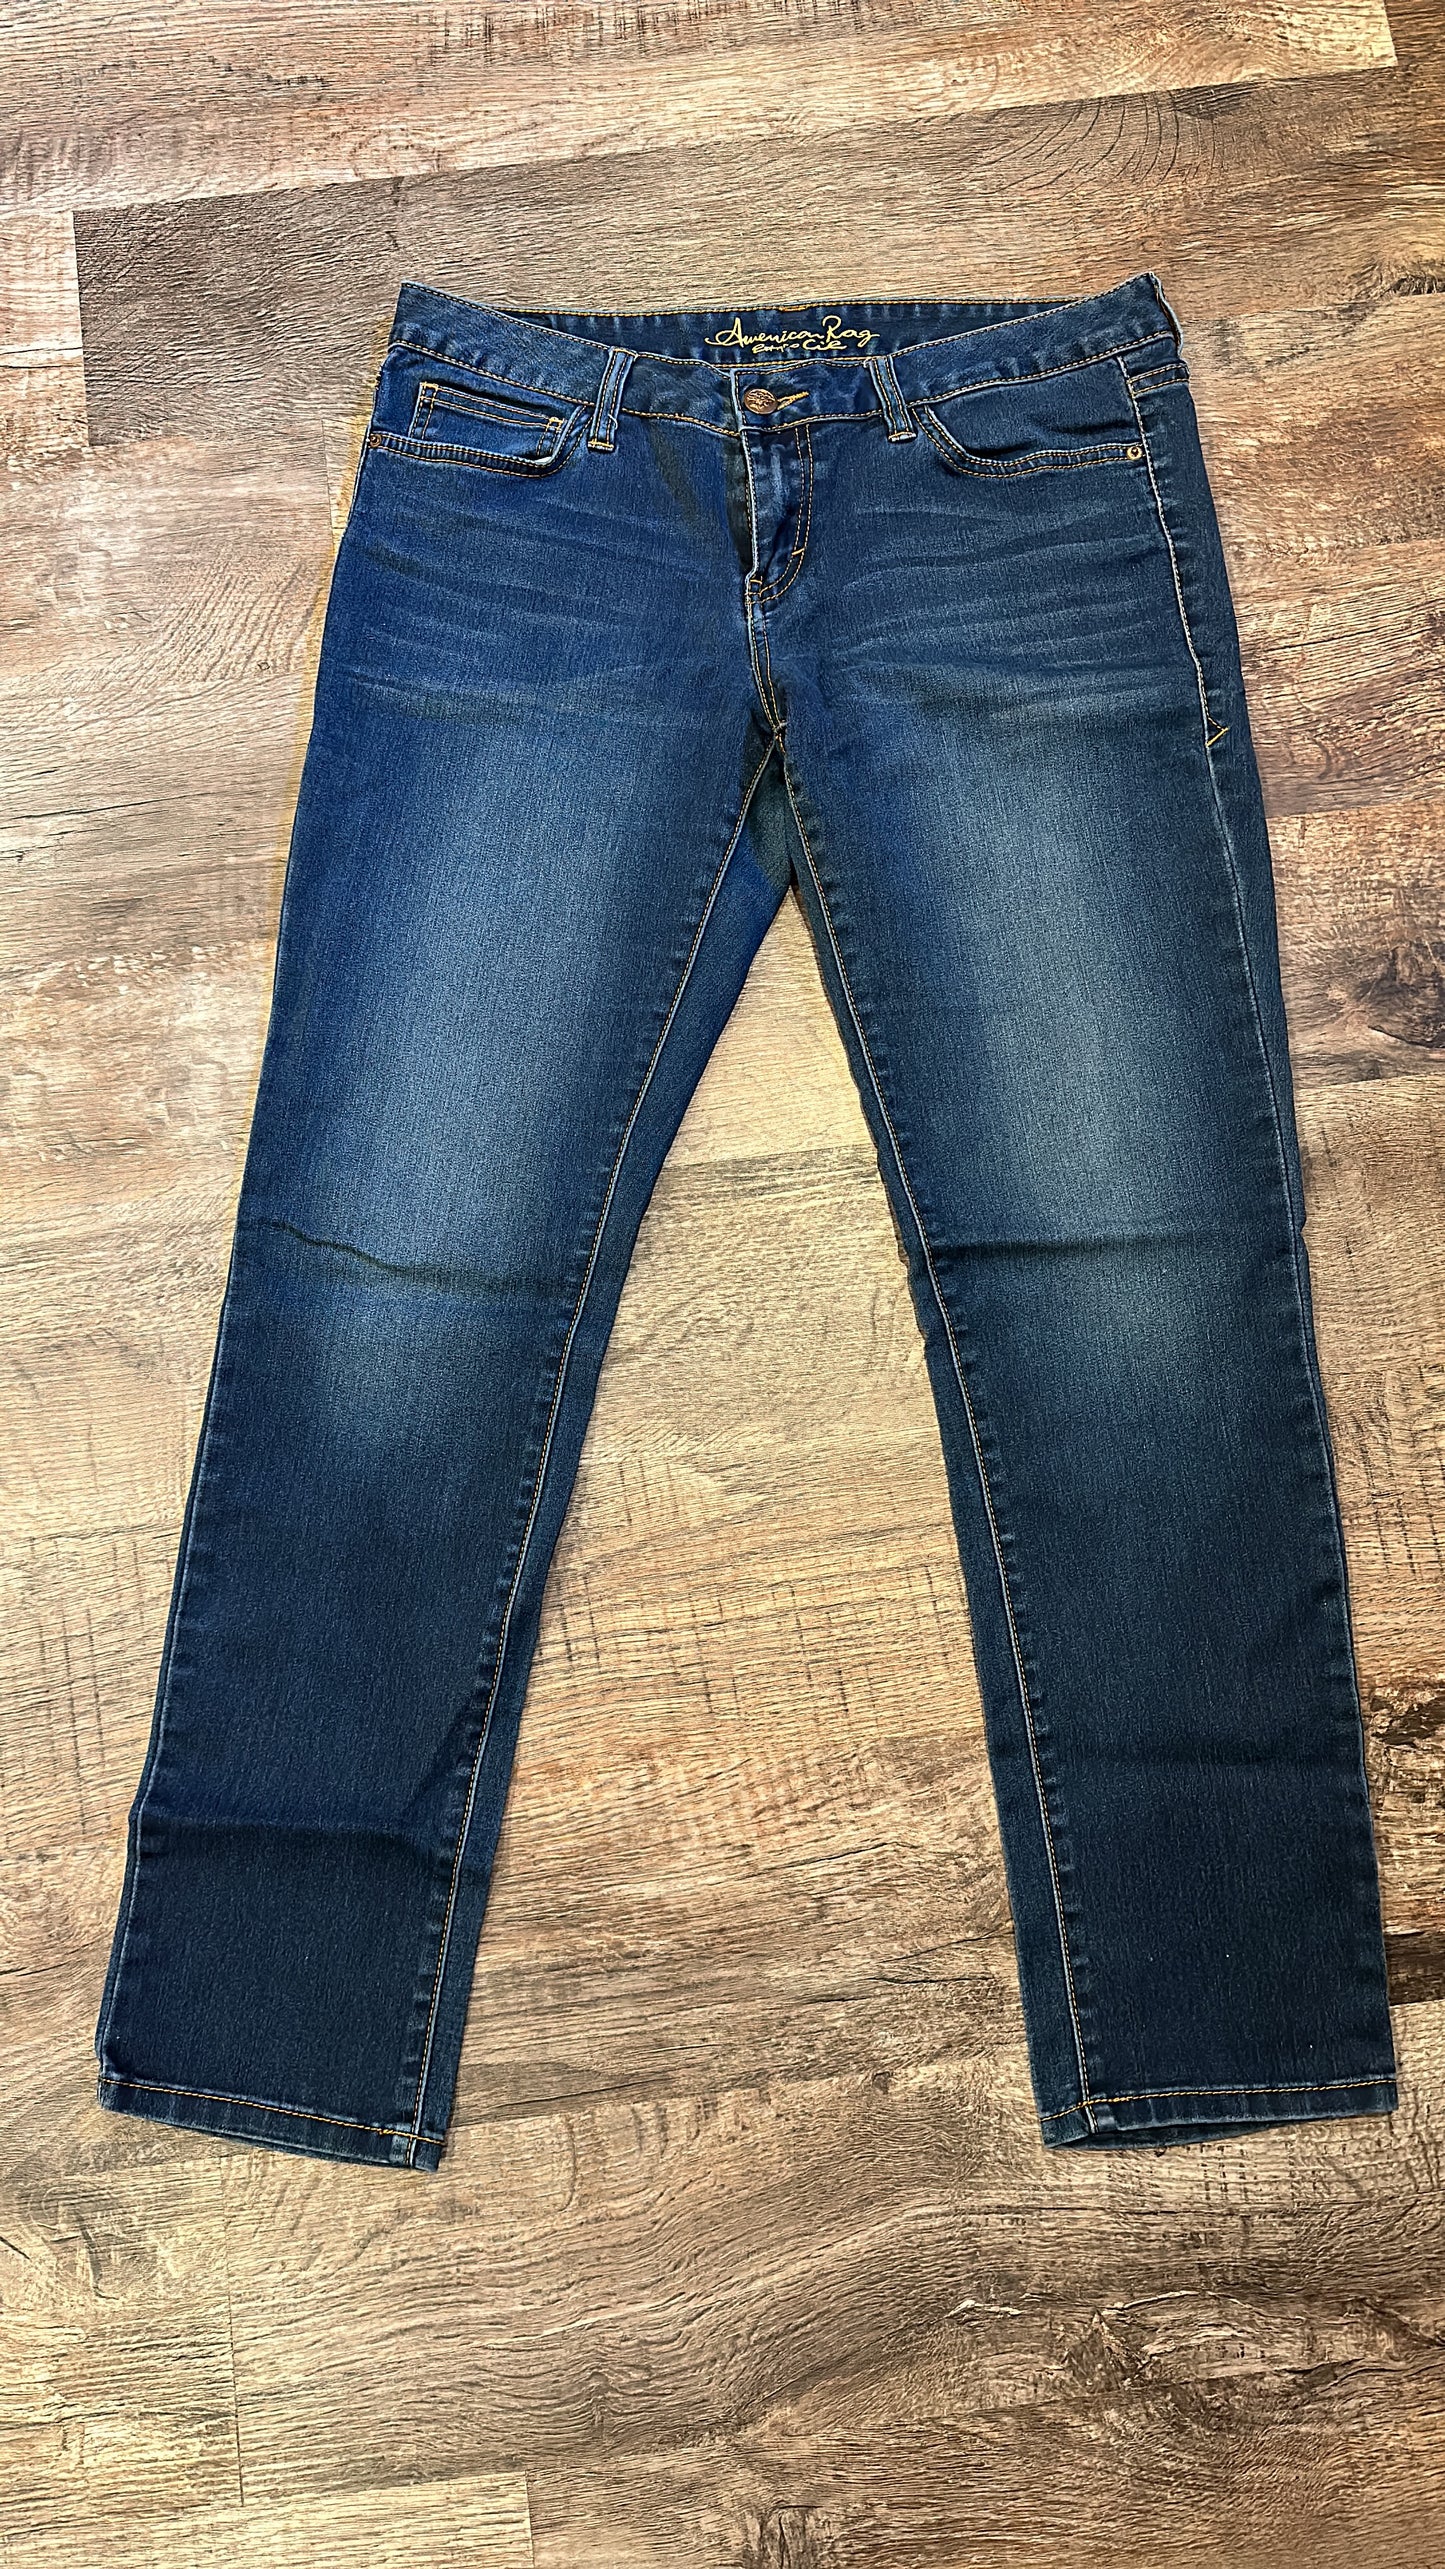 American Rag Jeans - Women's/Junior's 11